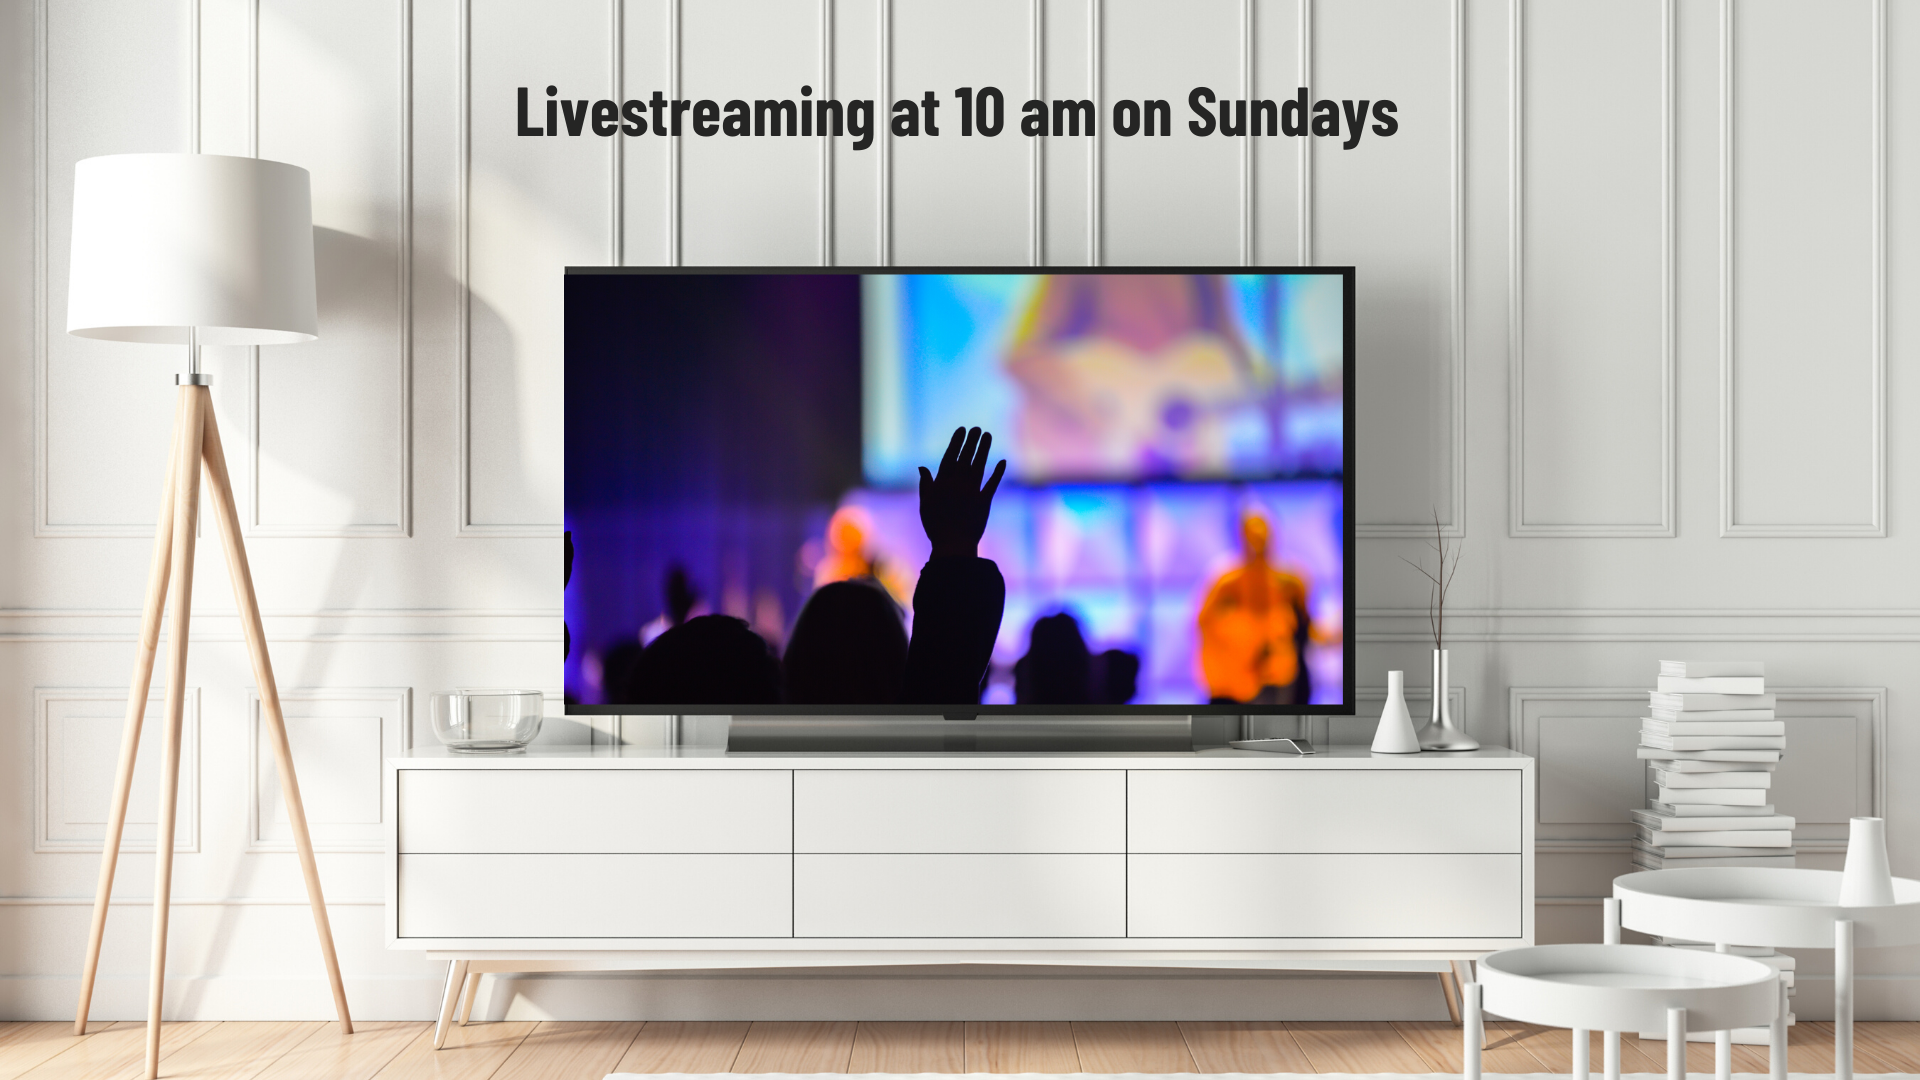 Livestreaming at 10 on Sundays